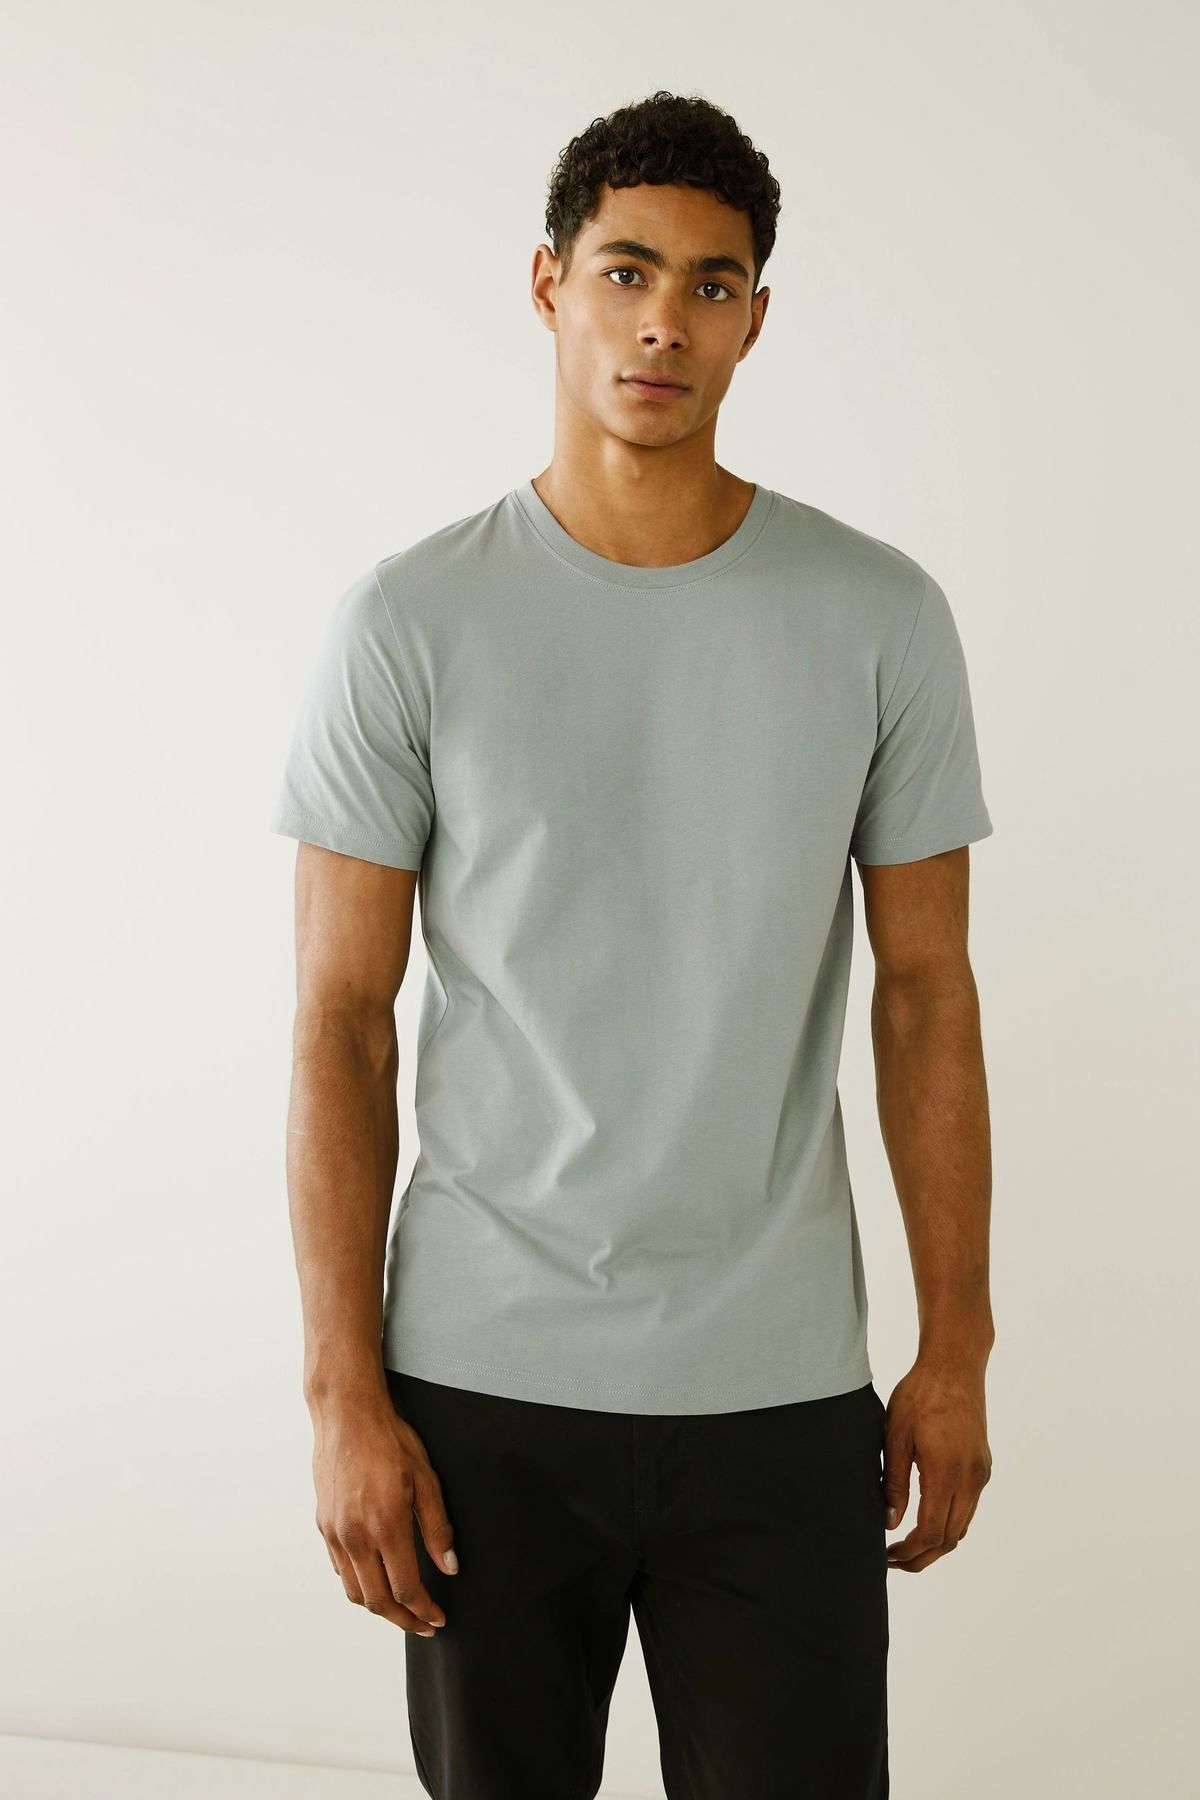 NEXT essential-crew-neck-t-shirt-nxt-u92669-silver Purple Men T-Shirts